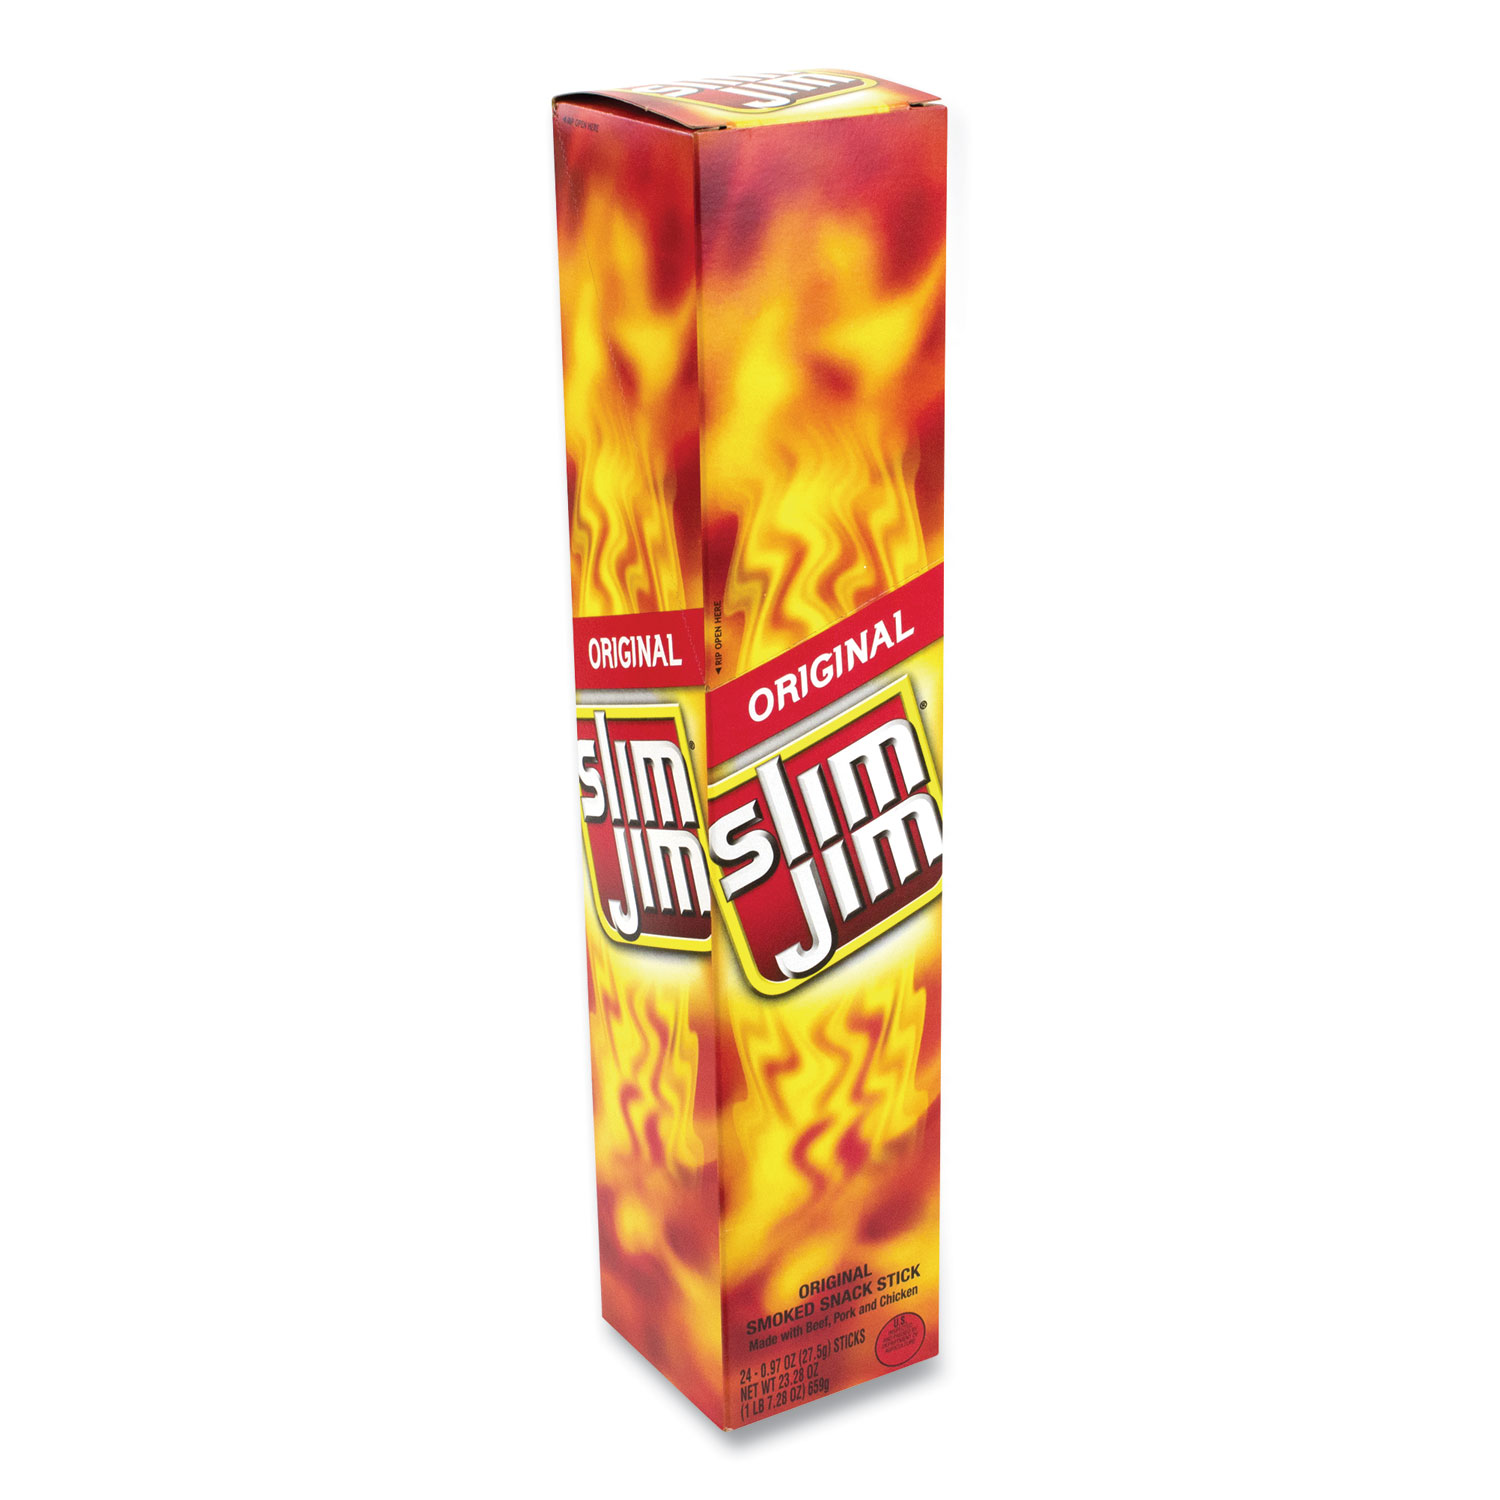  Slim Jim 11705 Original Smoked Snack Stick, 0.97 oz Stick, 24 Sticks/Box, Free Delivery in 1-4 Business Days (GRR20900657) 